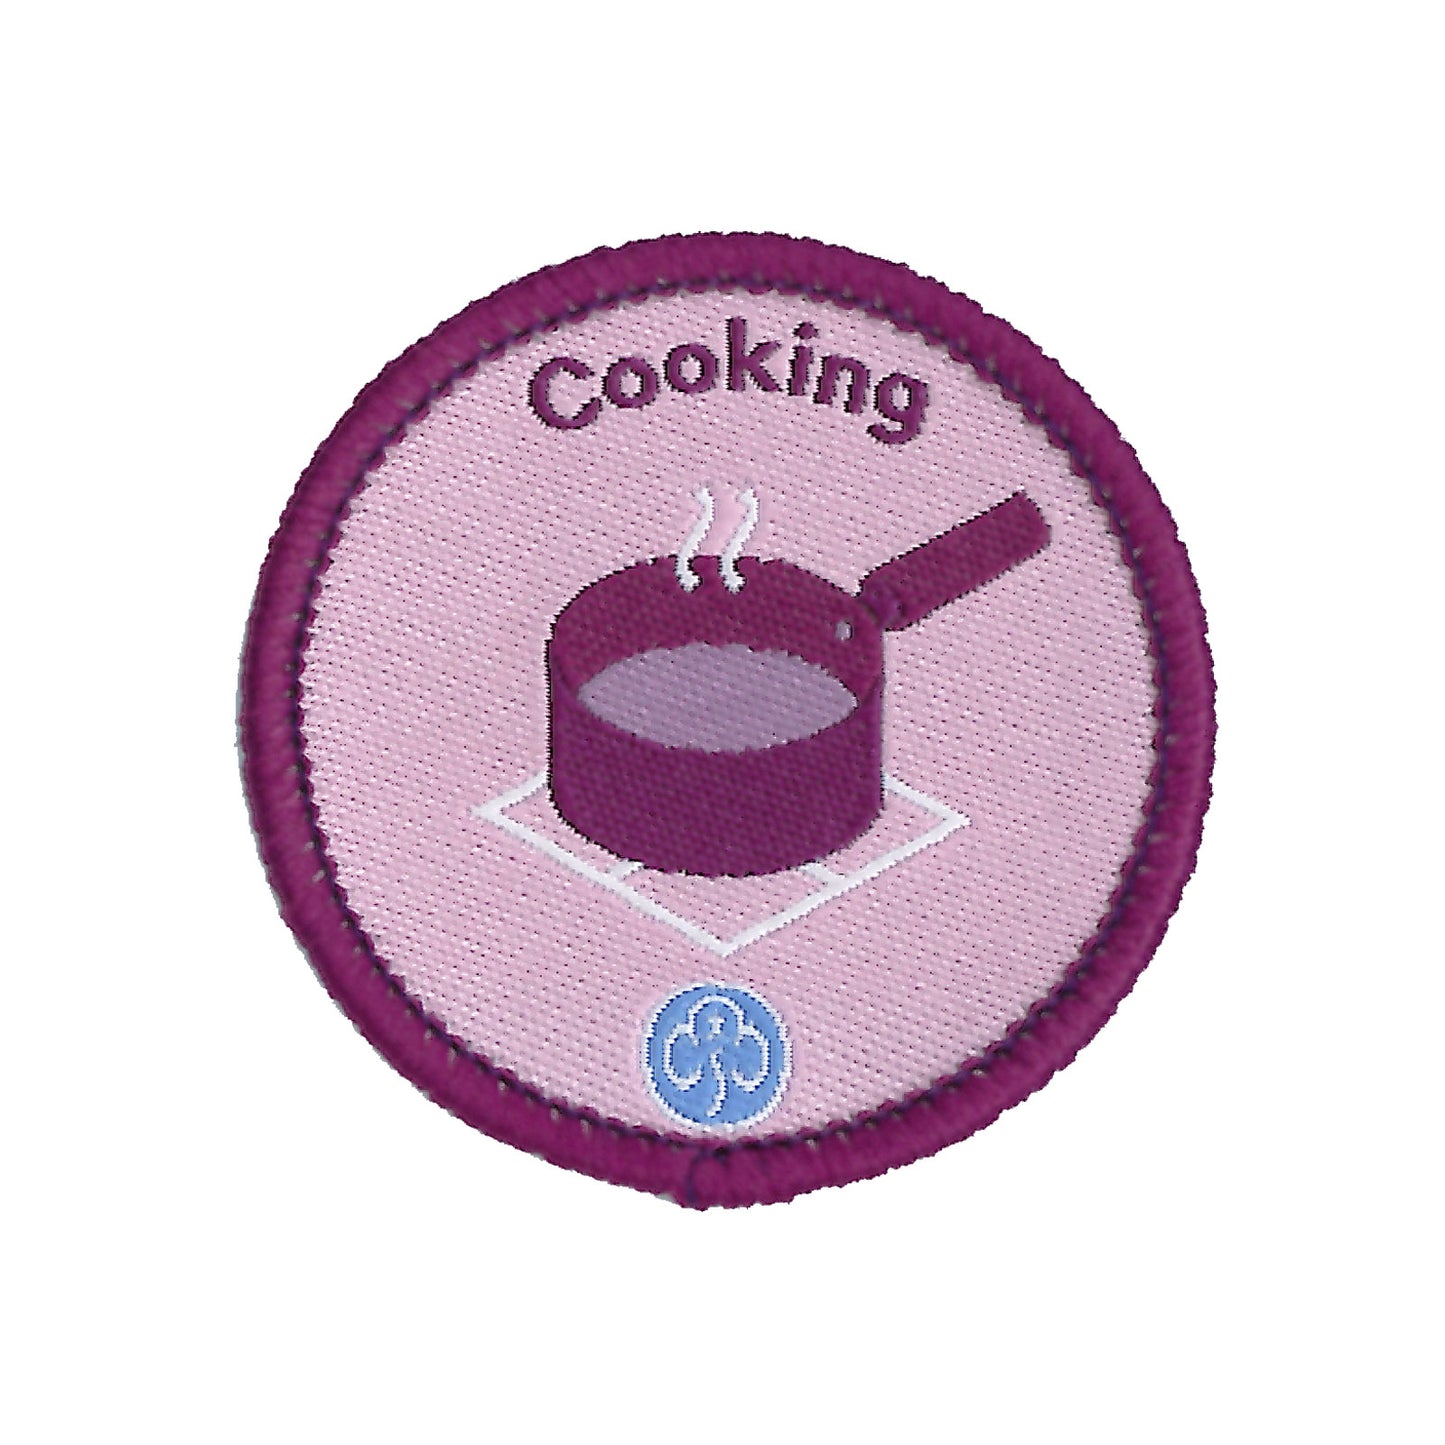 Rangers Cooking Woven Badge